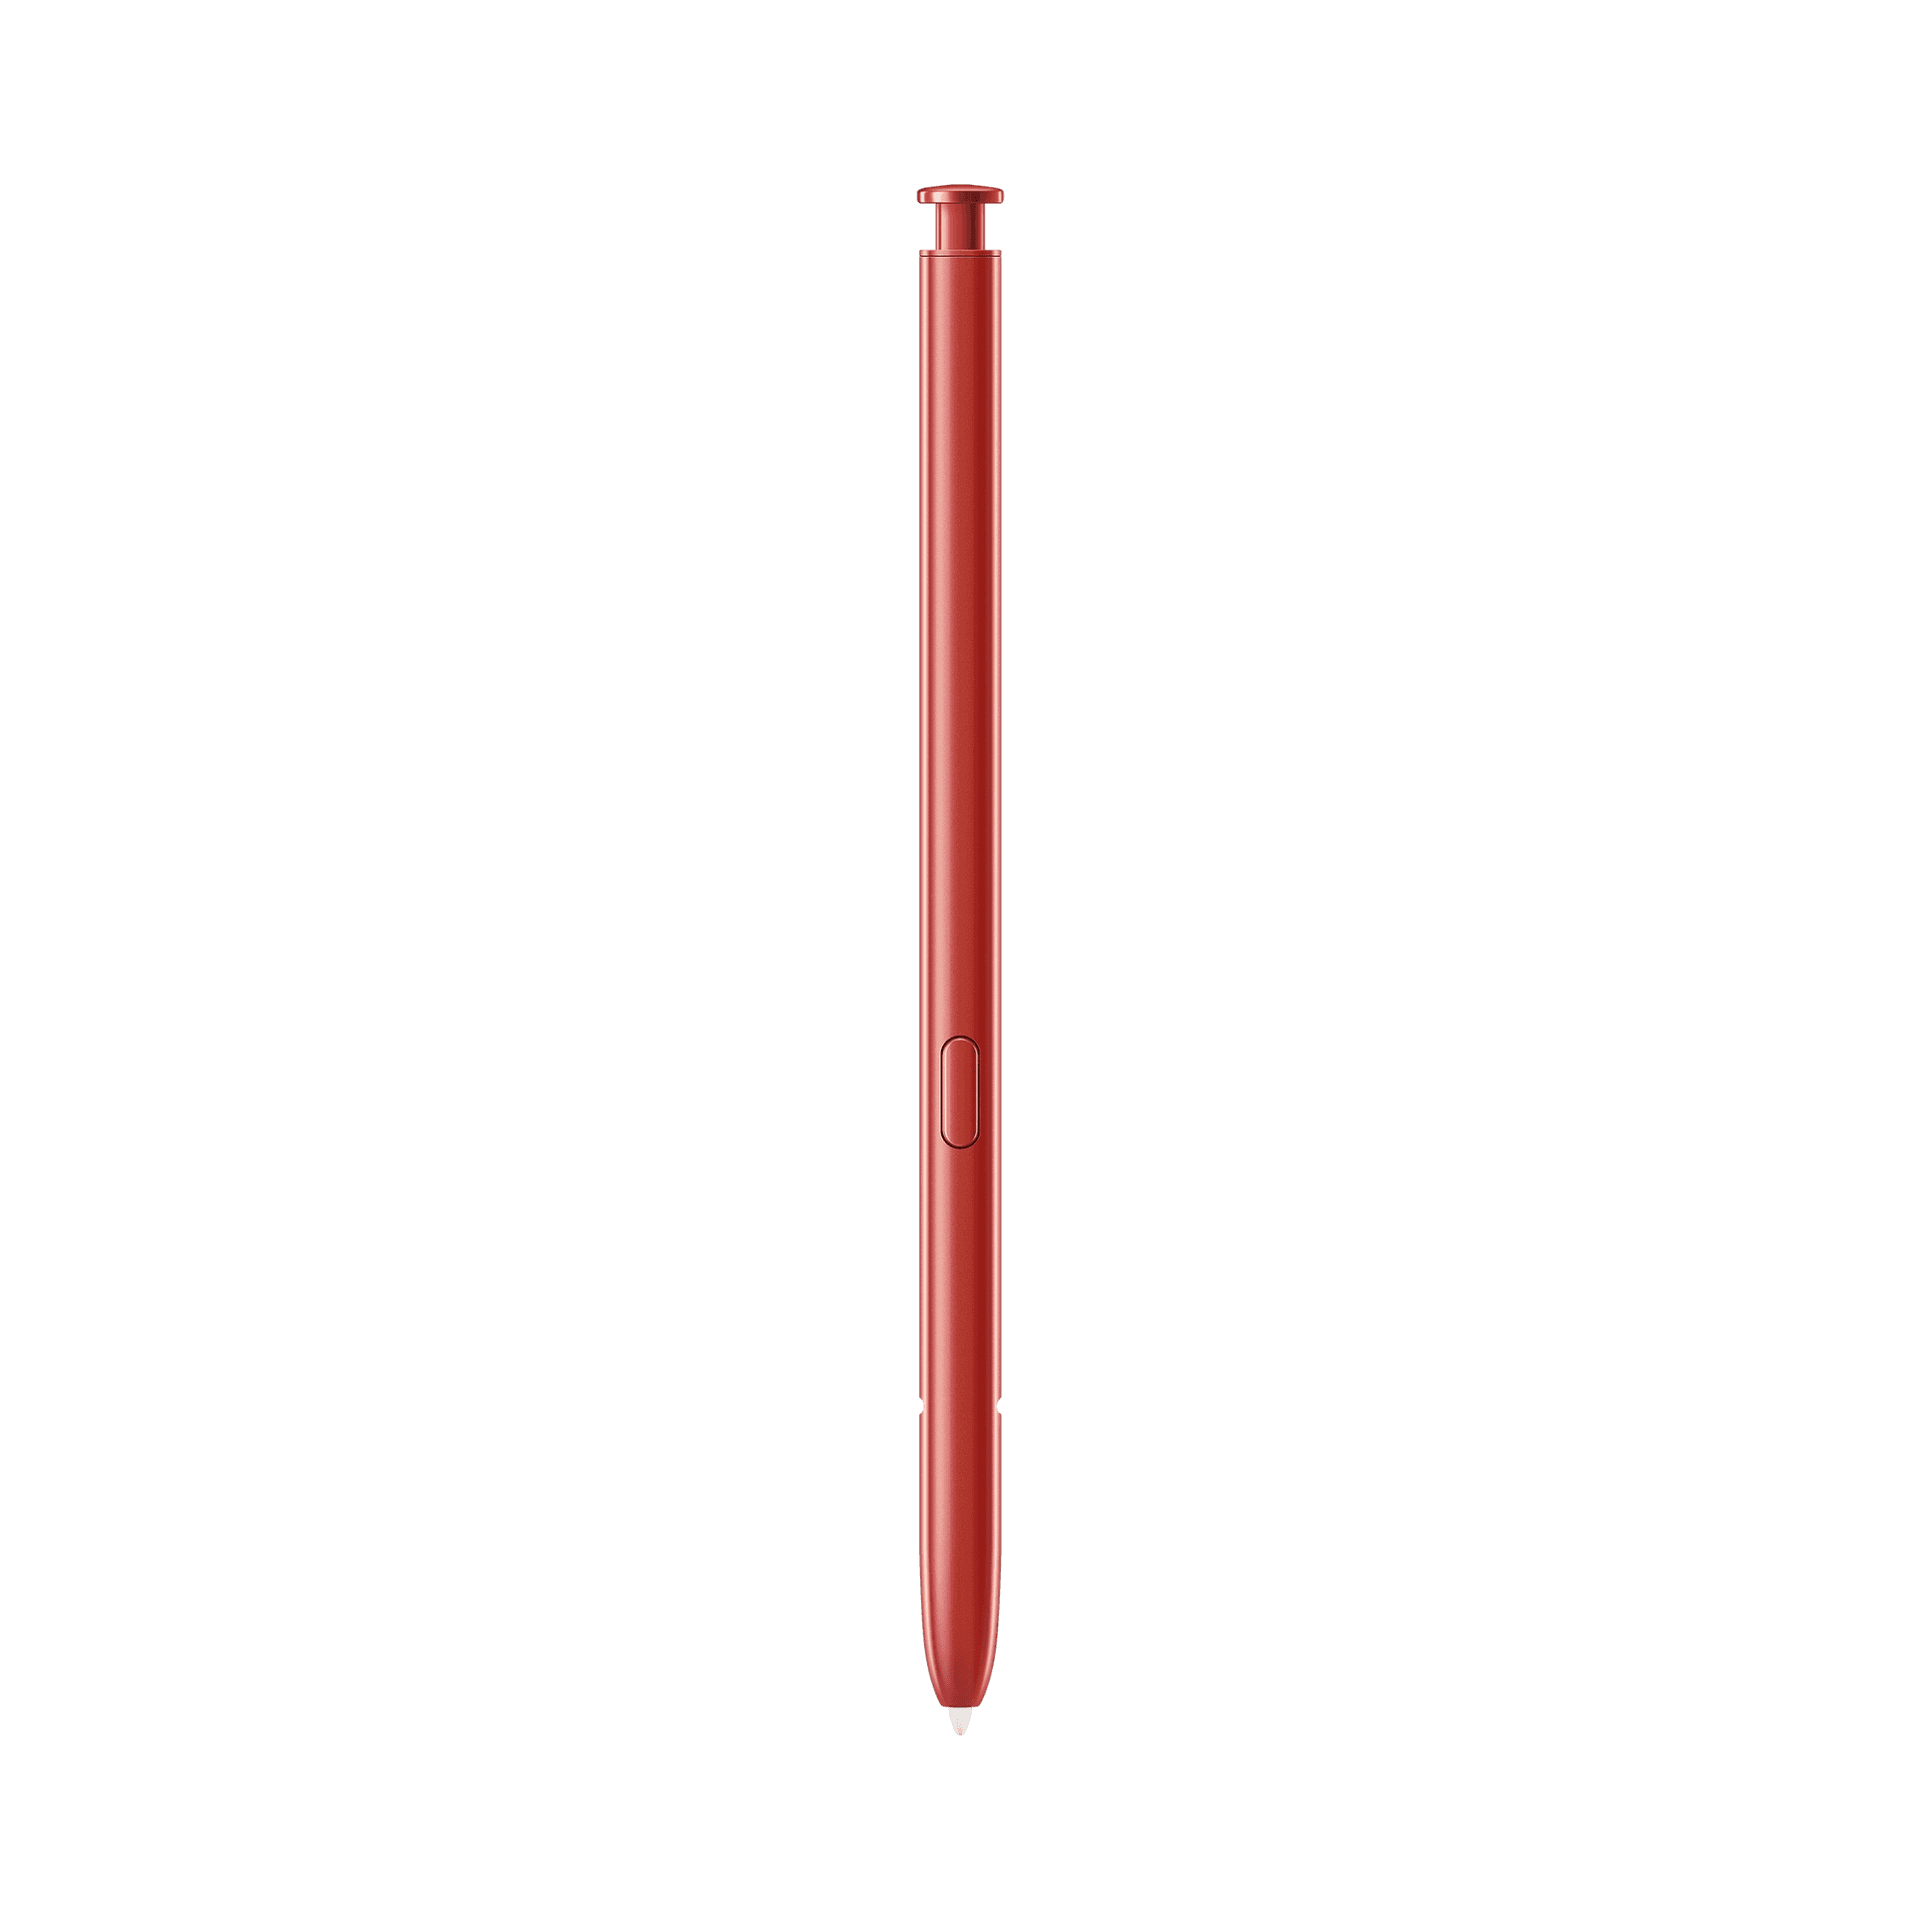 Samsung Galaxy Note 10 Lite - 128 GB - Aura Kırmızısı